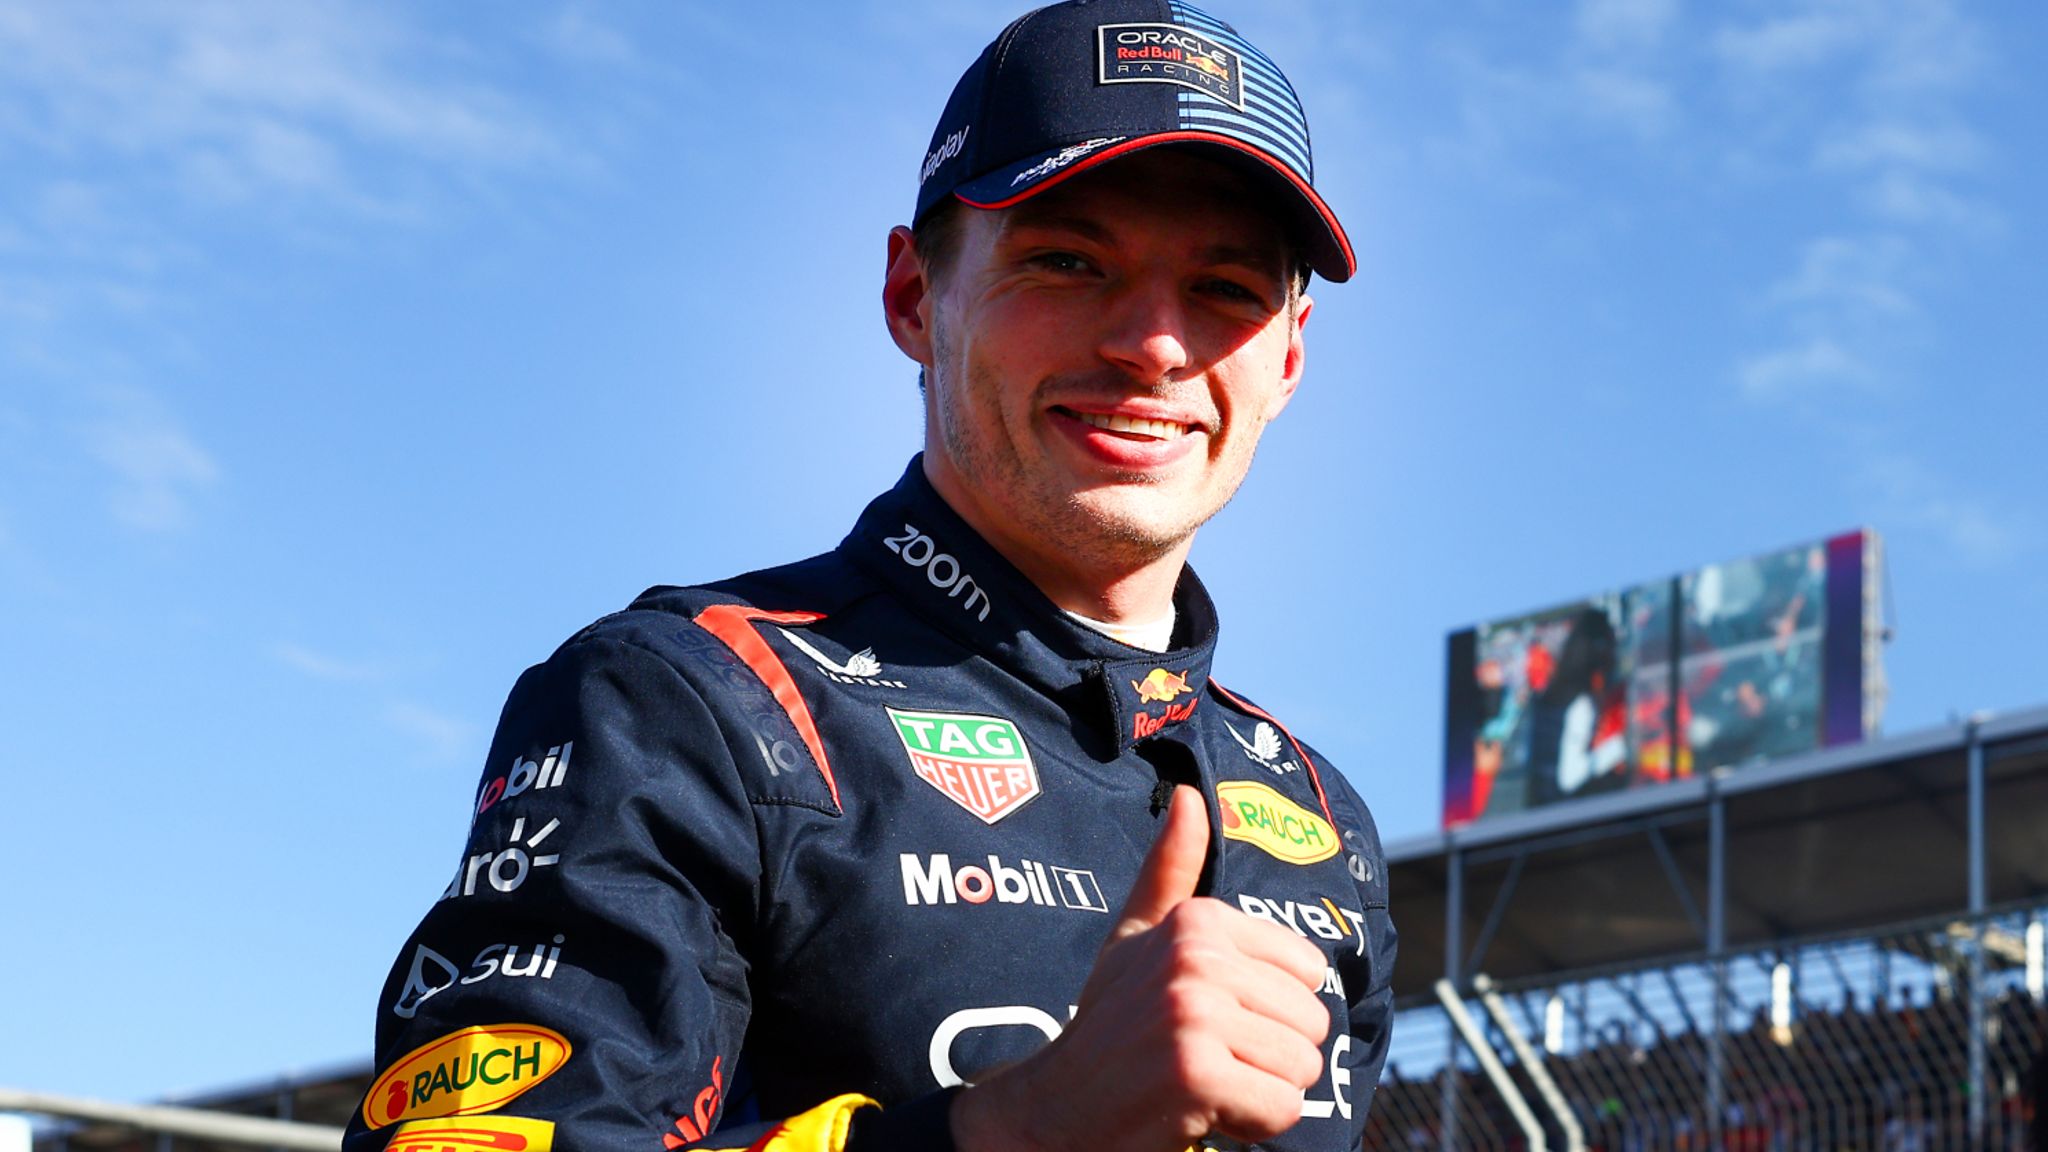 Verstappen Attributes "Subtle Adjustments" to Car for Securing Pole Position in F1 Australian Grand Prix